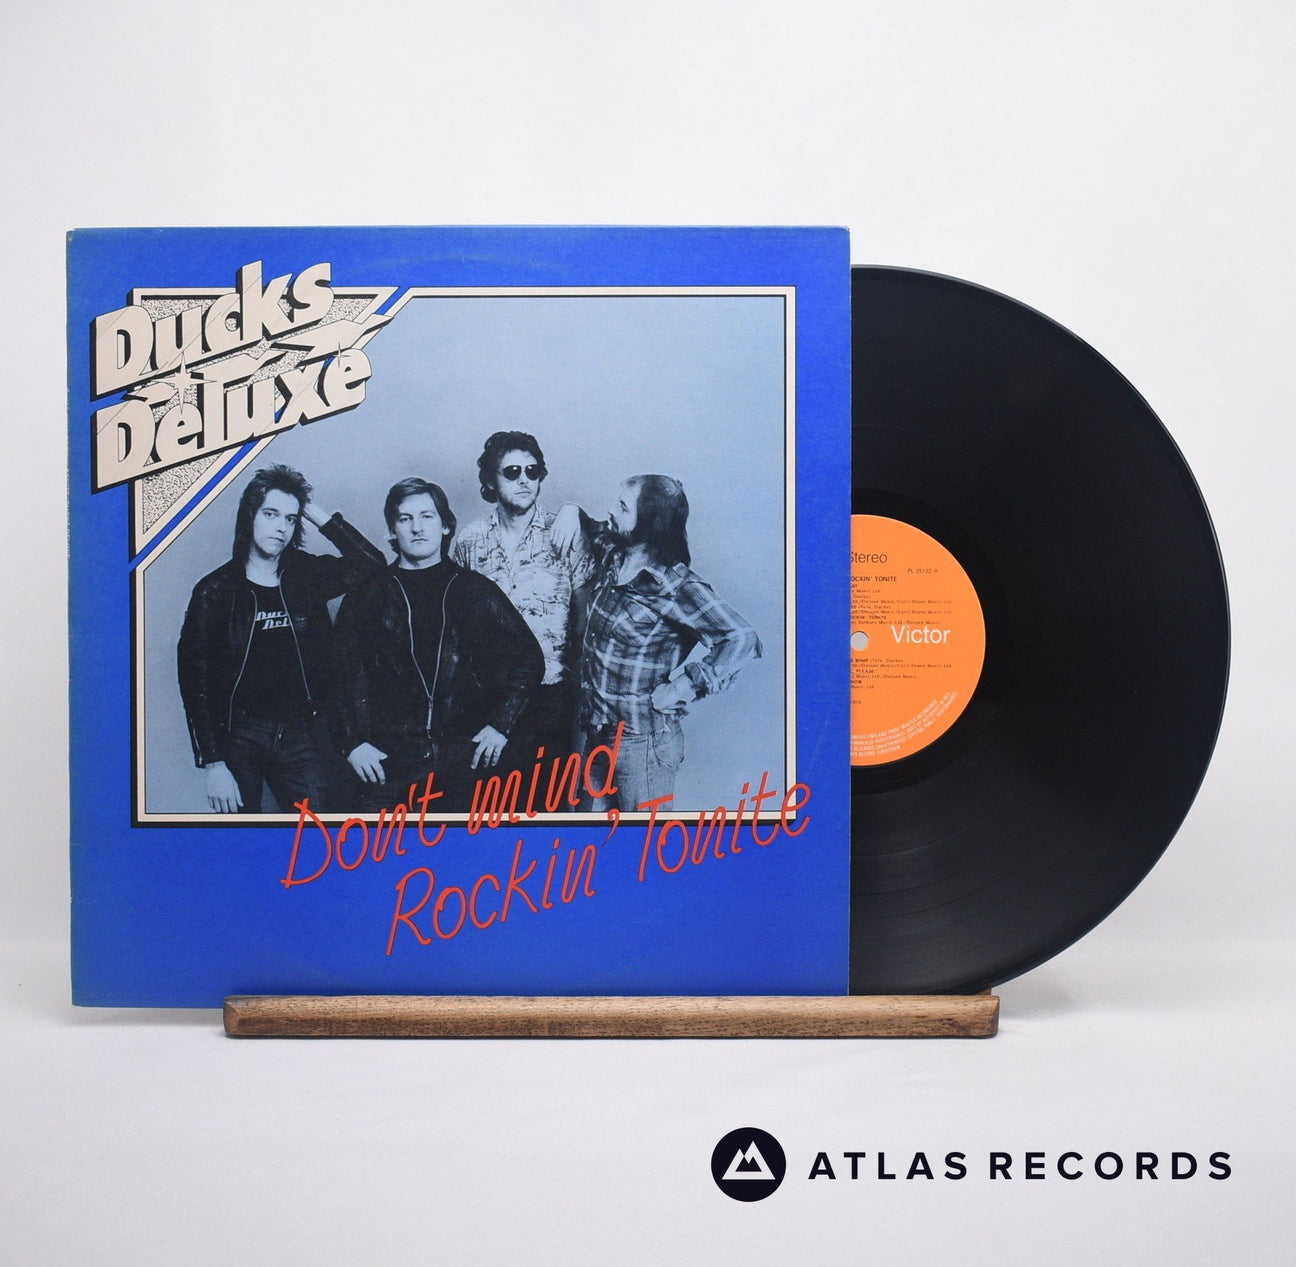 Ducks Deluxe Don't Mind Rockin' Tonite LP Vinyl Record - Front Cover & Record